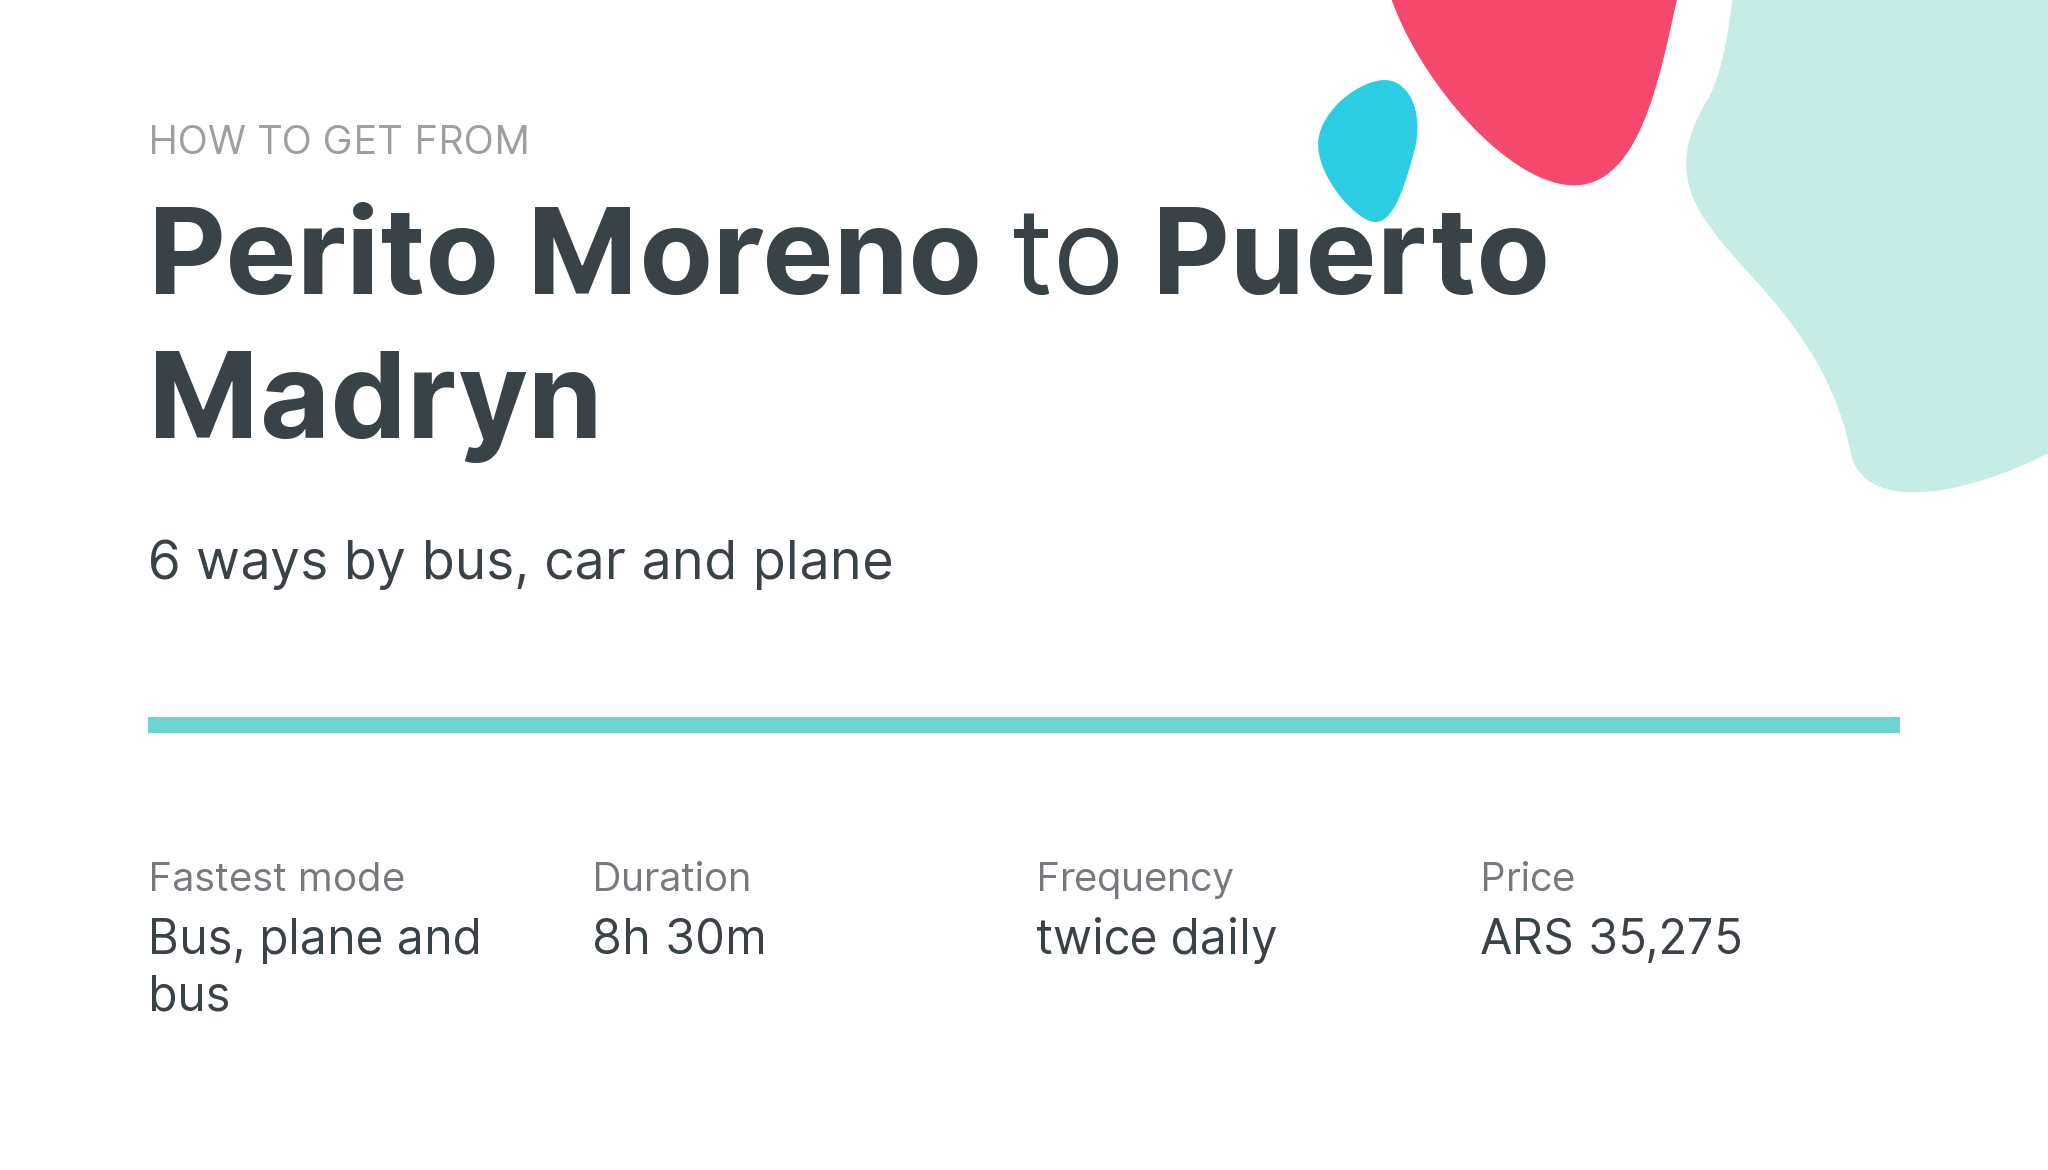 How do I get from Perito Moreno to Puerto Madryn